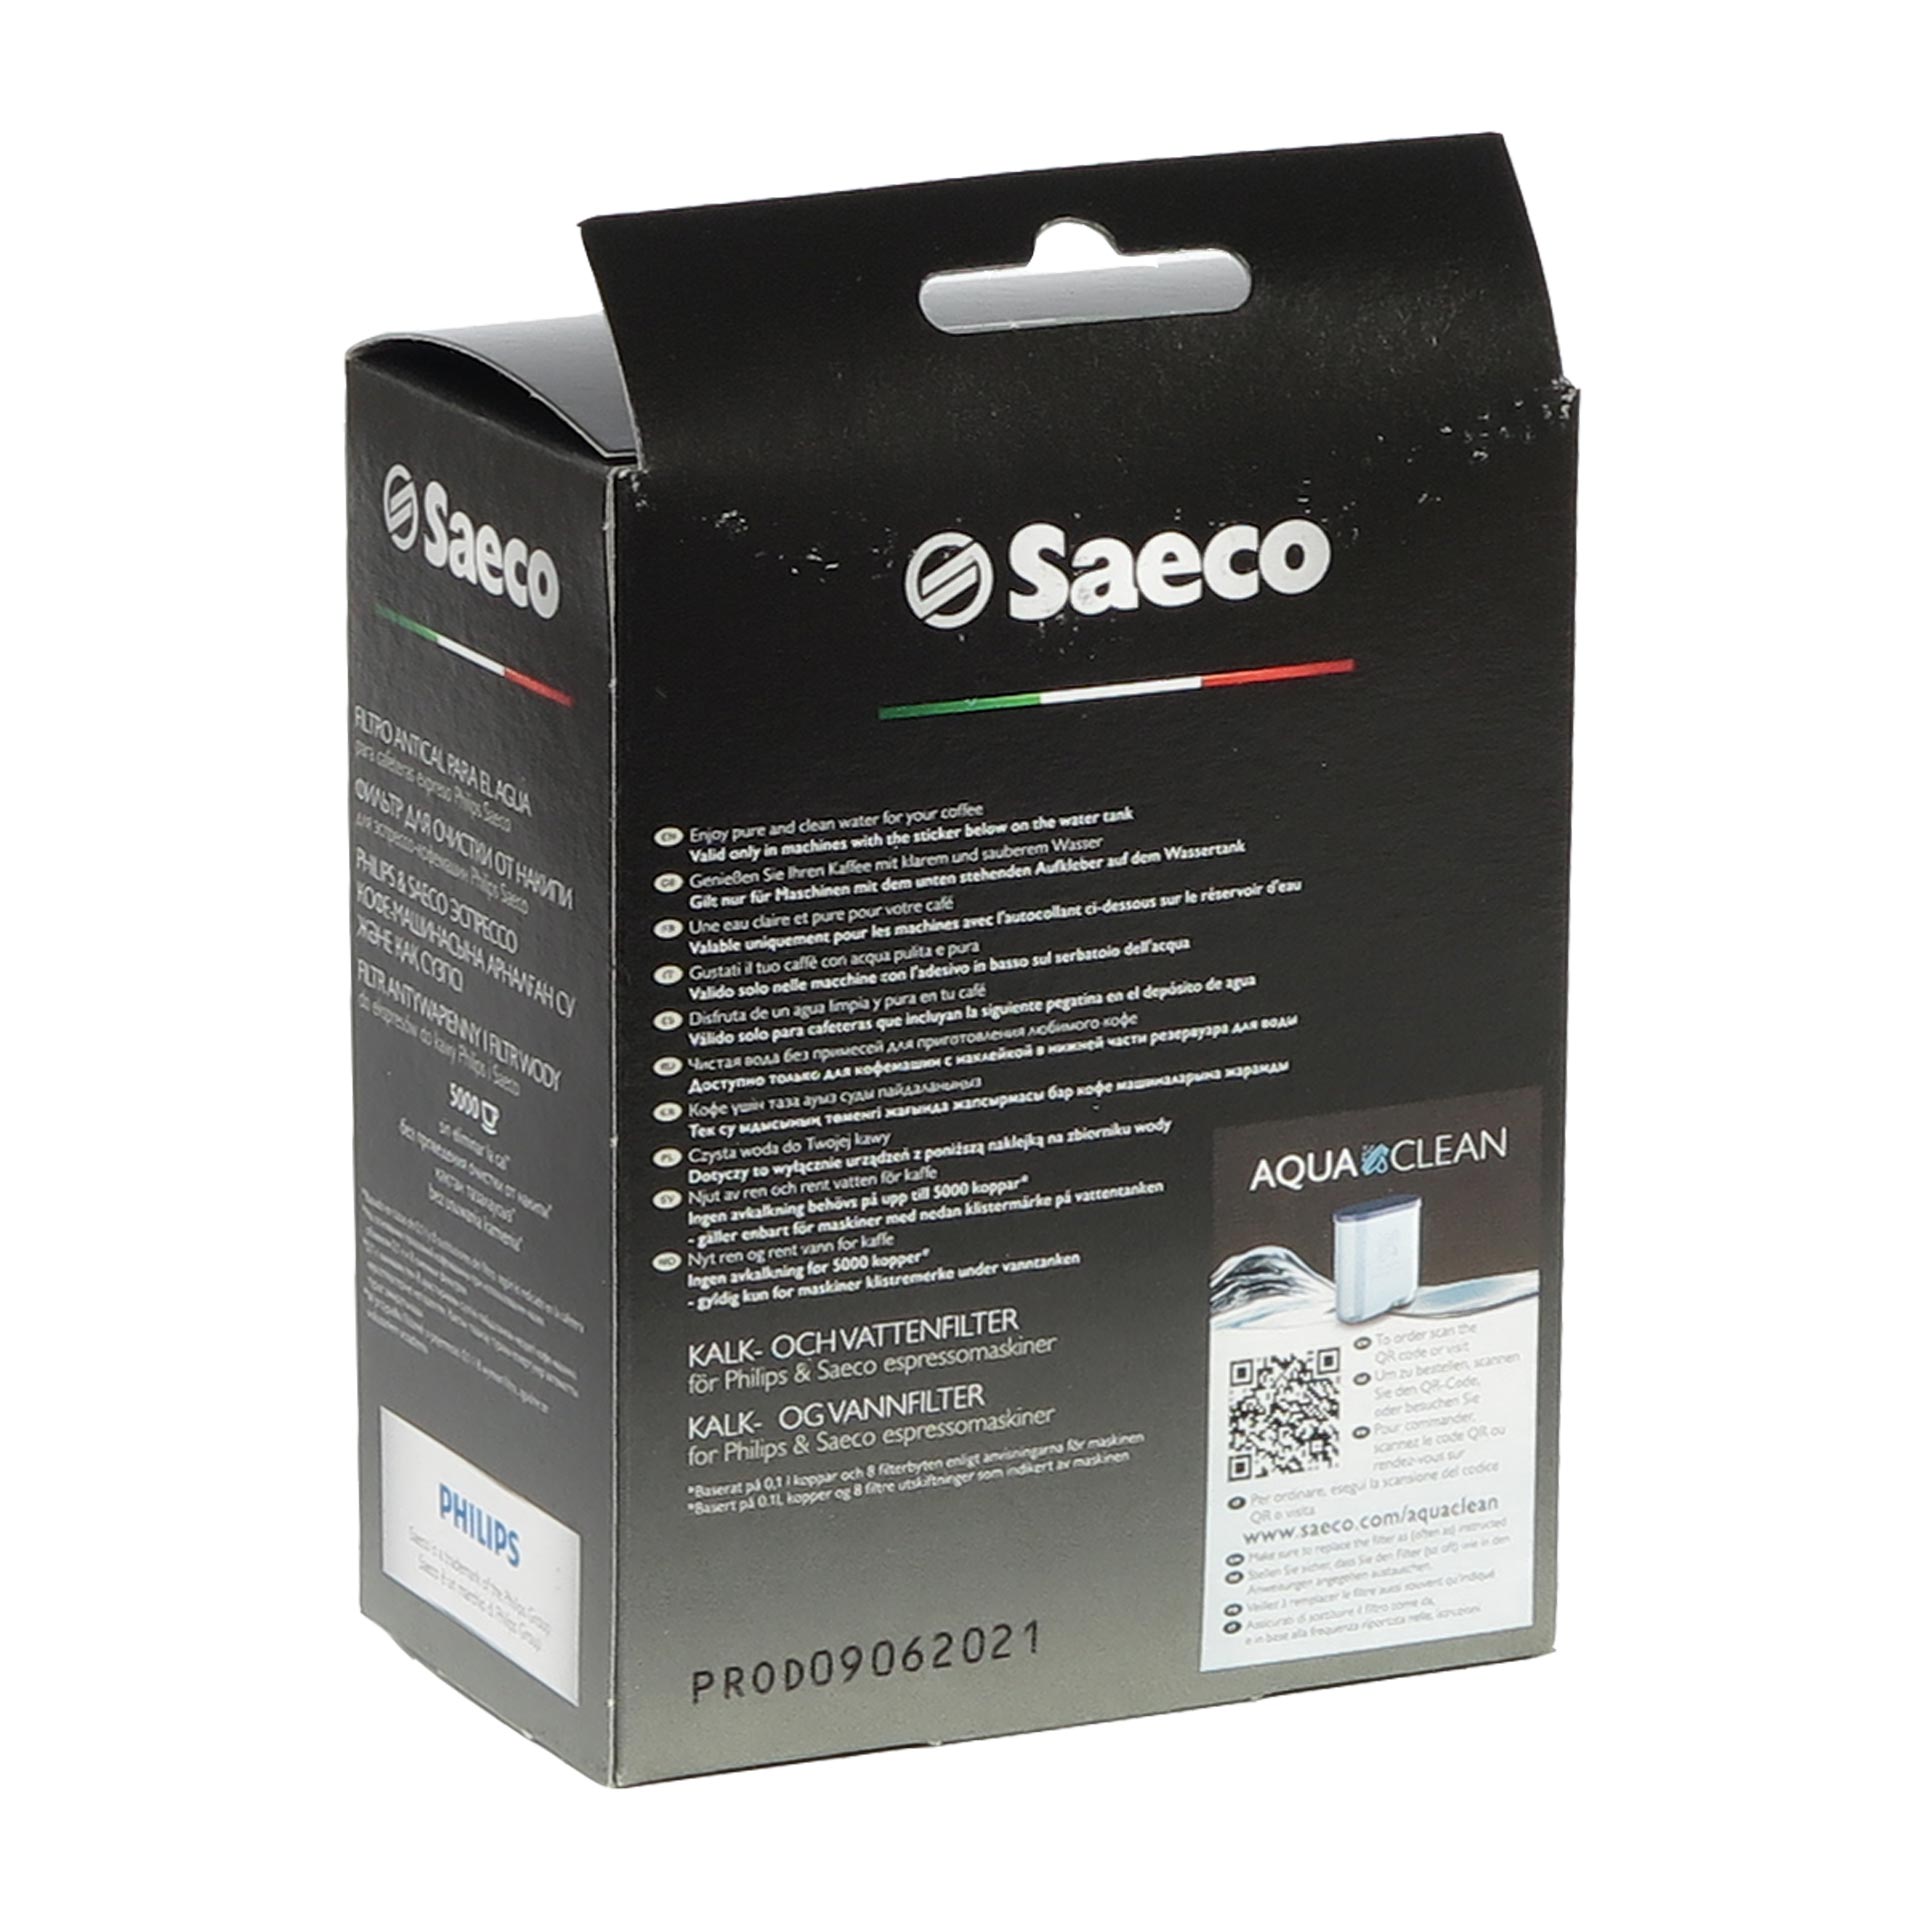 Saeco AquaClean Kalk- und Wasserfilter